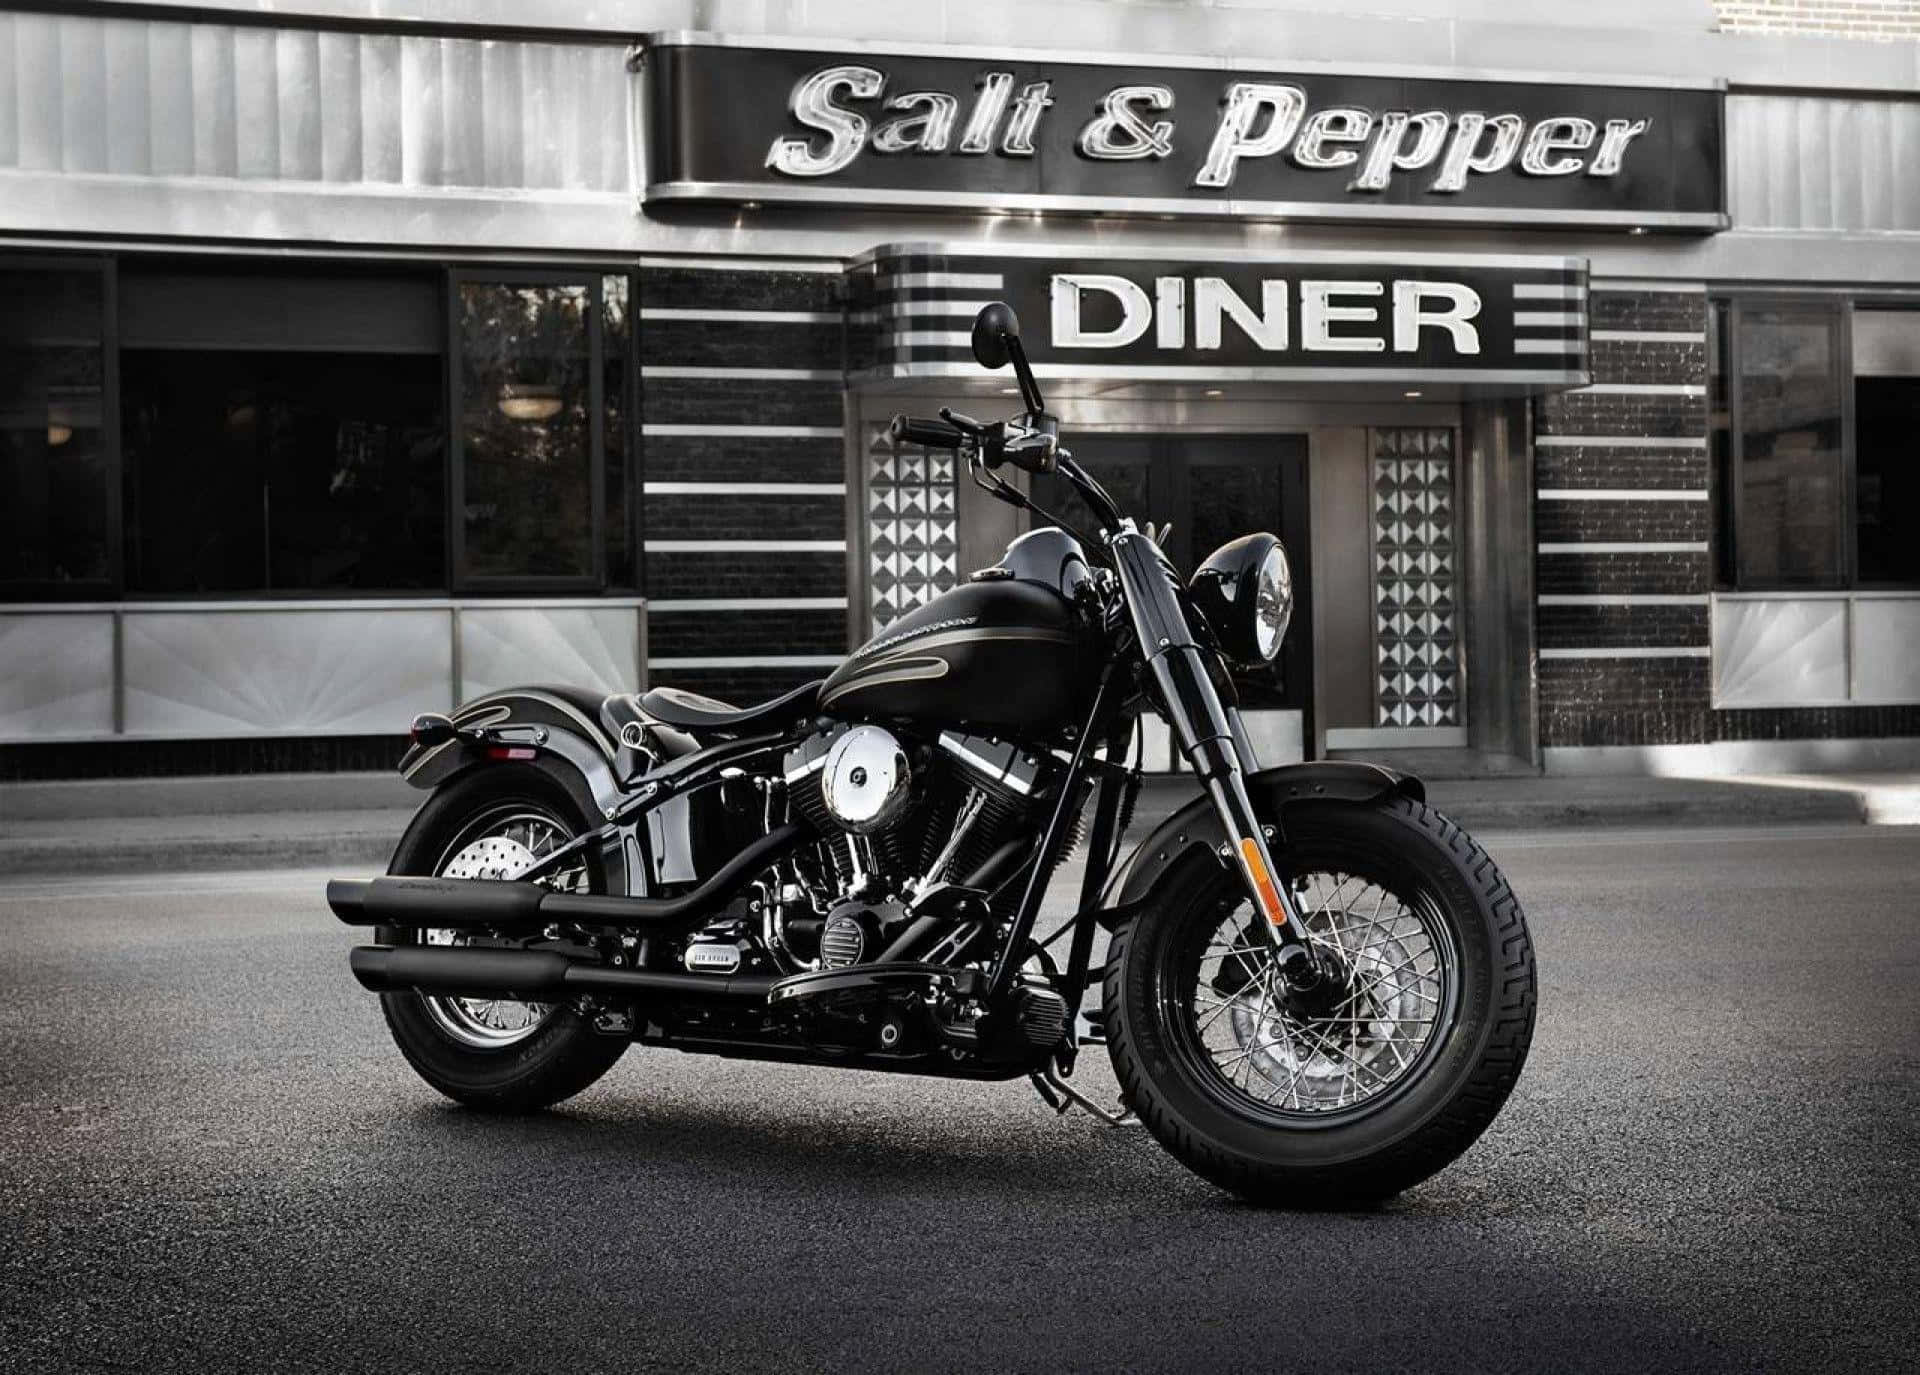 Harley Davidson Monochromatic Black And White Background